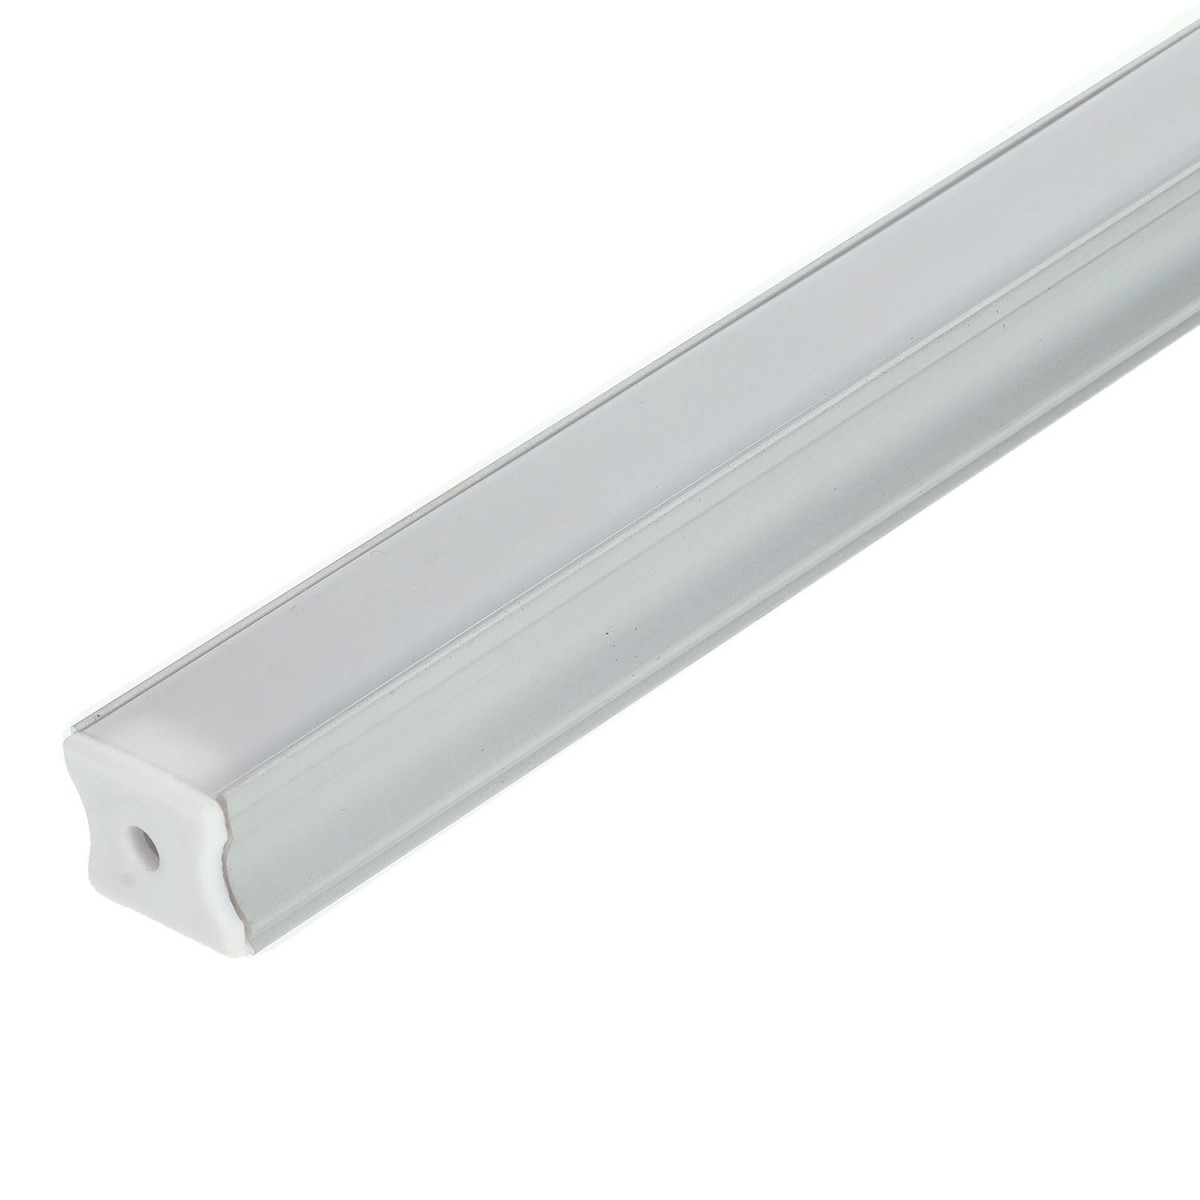 Profile for 2 m LED Strips - Rectangular, Aluminium, 17,5 x 14,5 x 2000mm, Clips